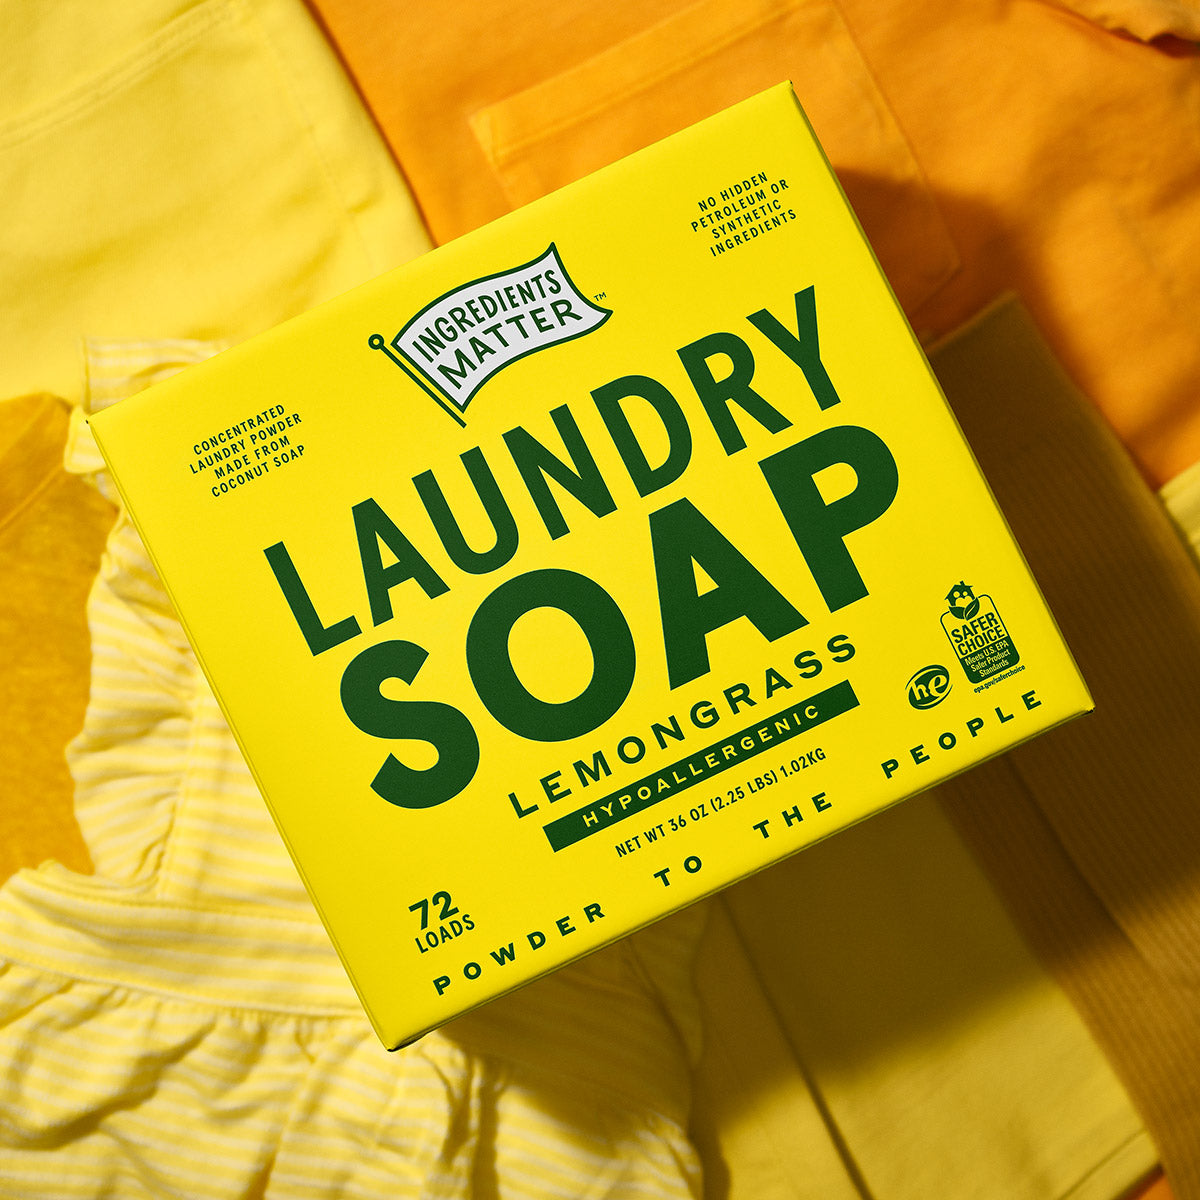 All Natural Lemongrass Laundry Soap. Hypoallergenic